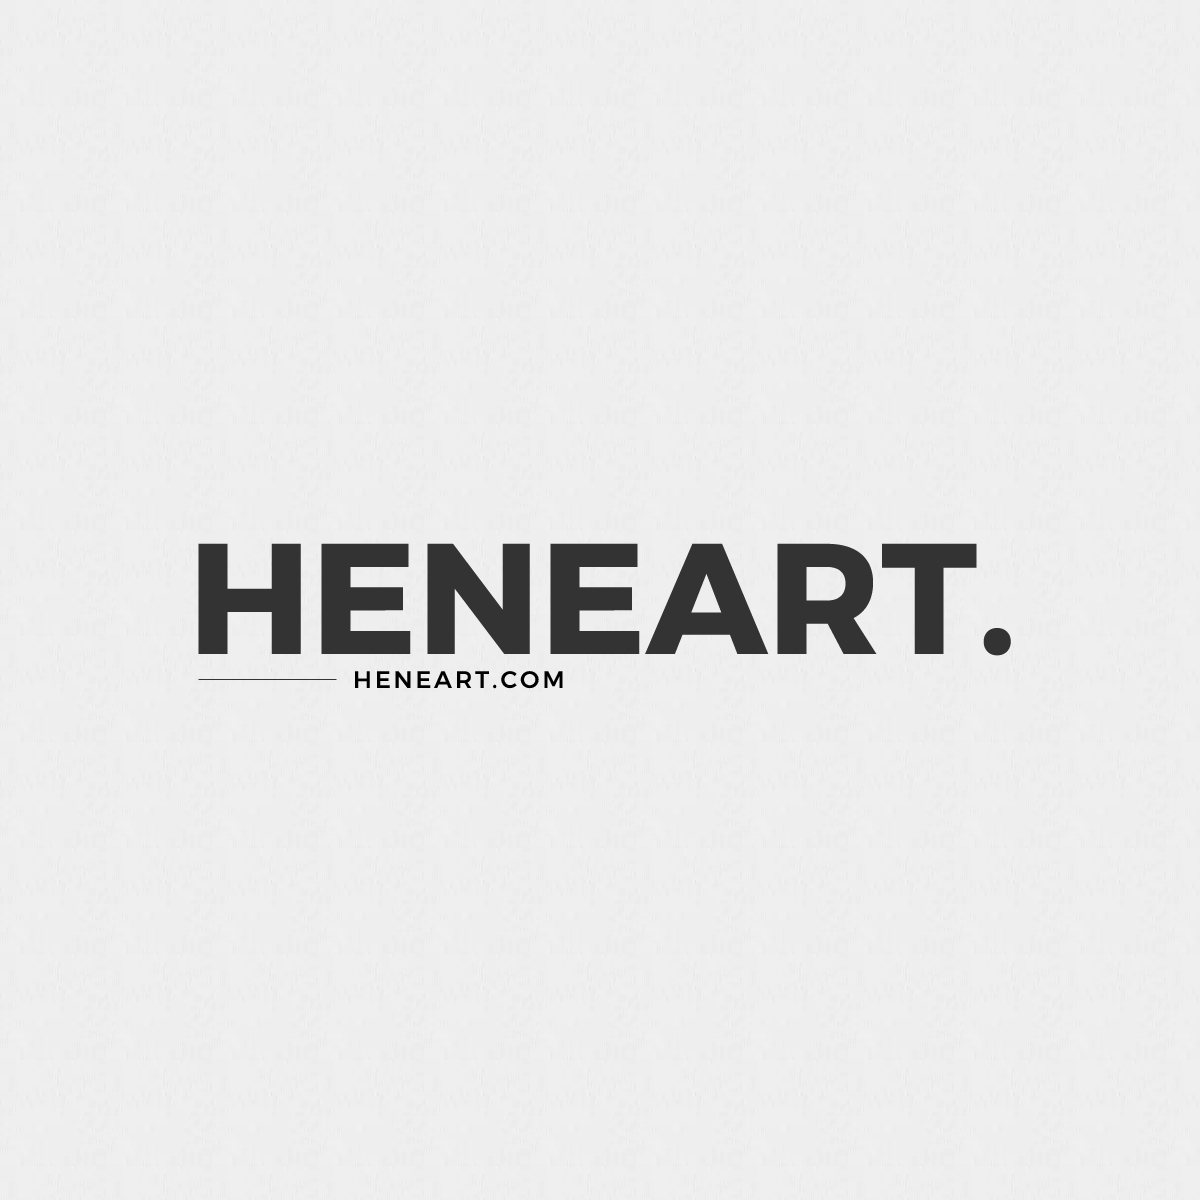 (c) Heneart.com